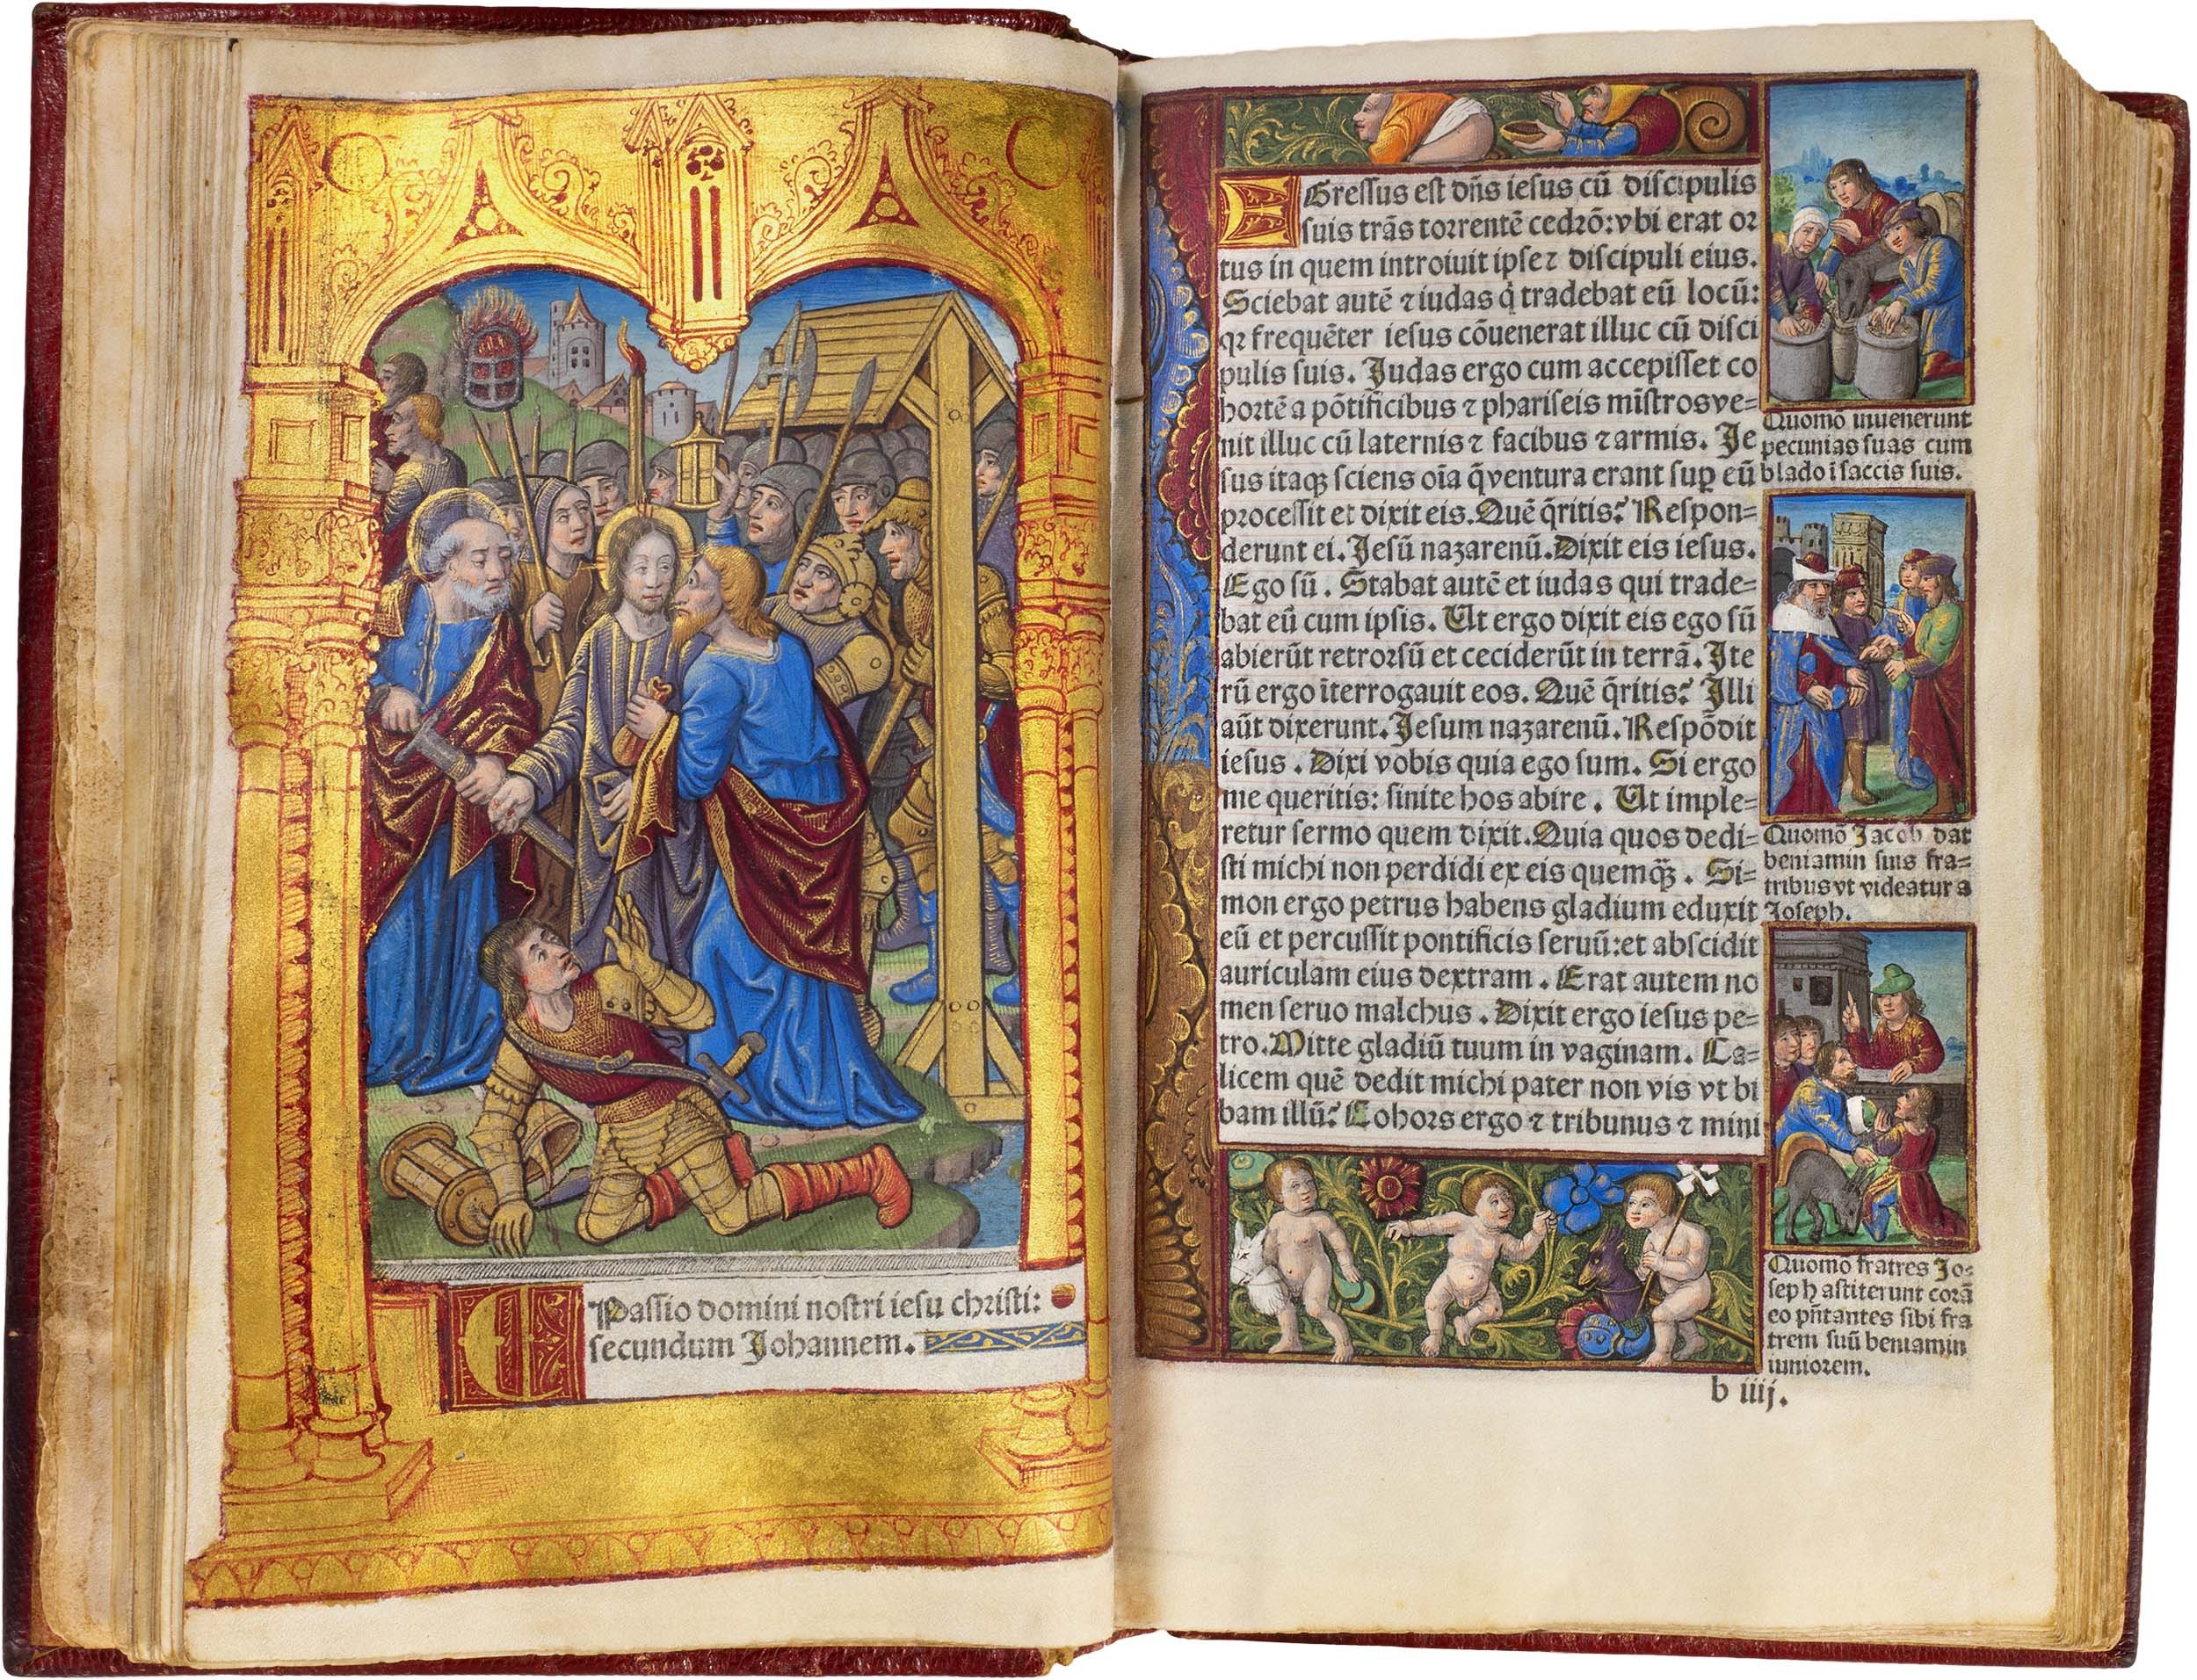 Horae-bmv-book-of-hours-Louis-XII-martainville-master-philippa-guelders-paris-pigouchet-vostre-15.10.1499-16.jpg